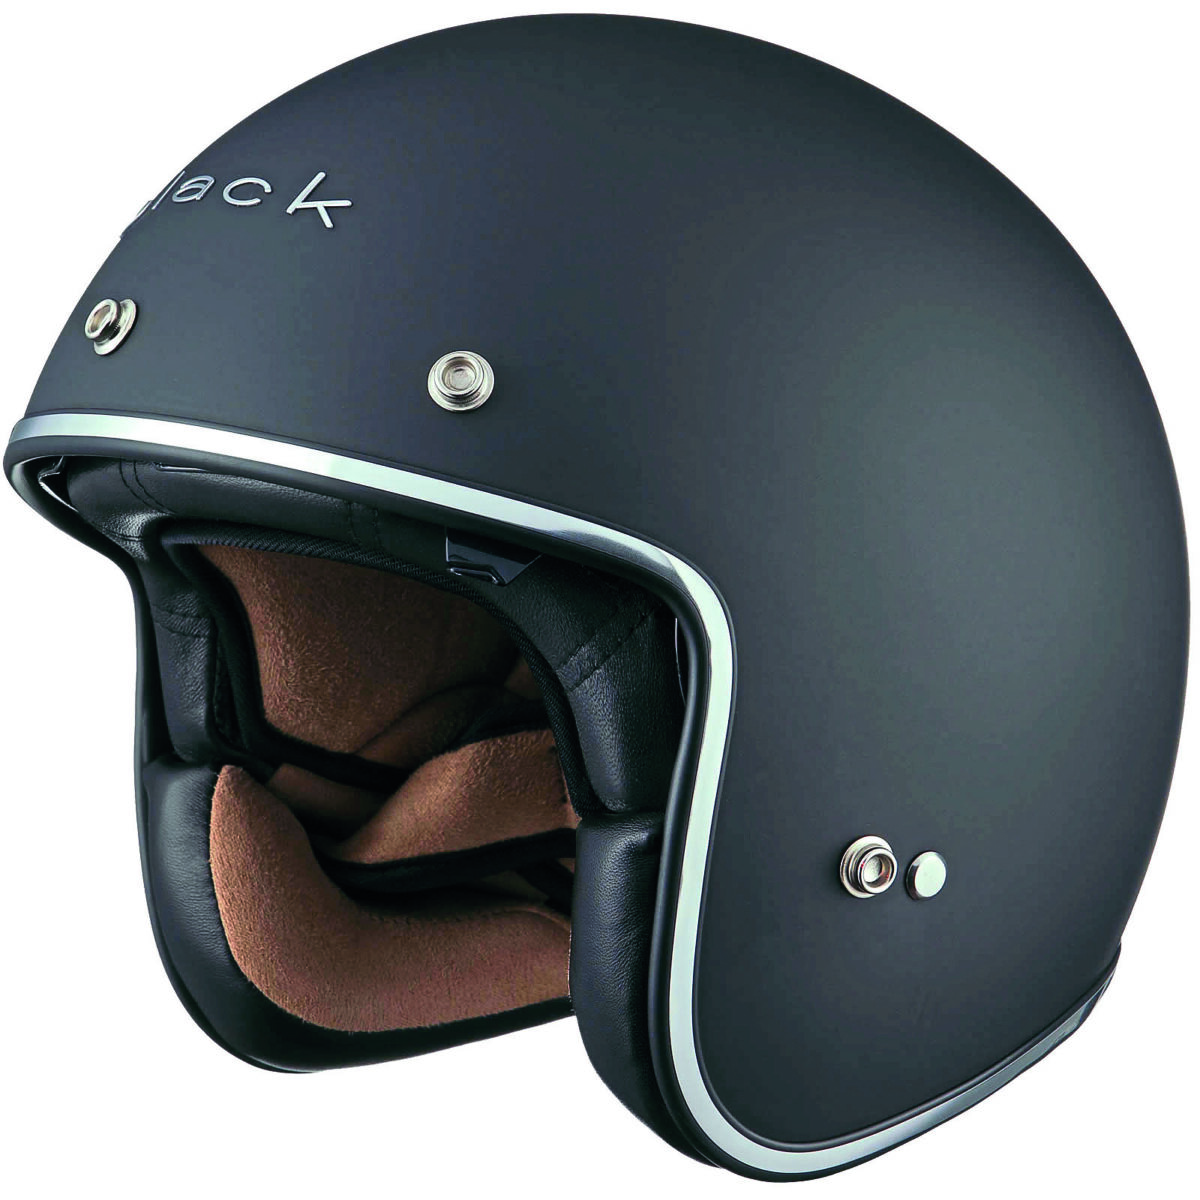 NEW IN: Black Classic Open Face Helmet